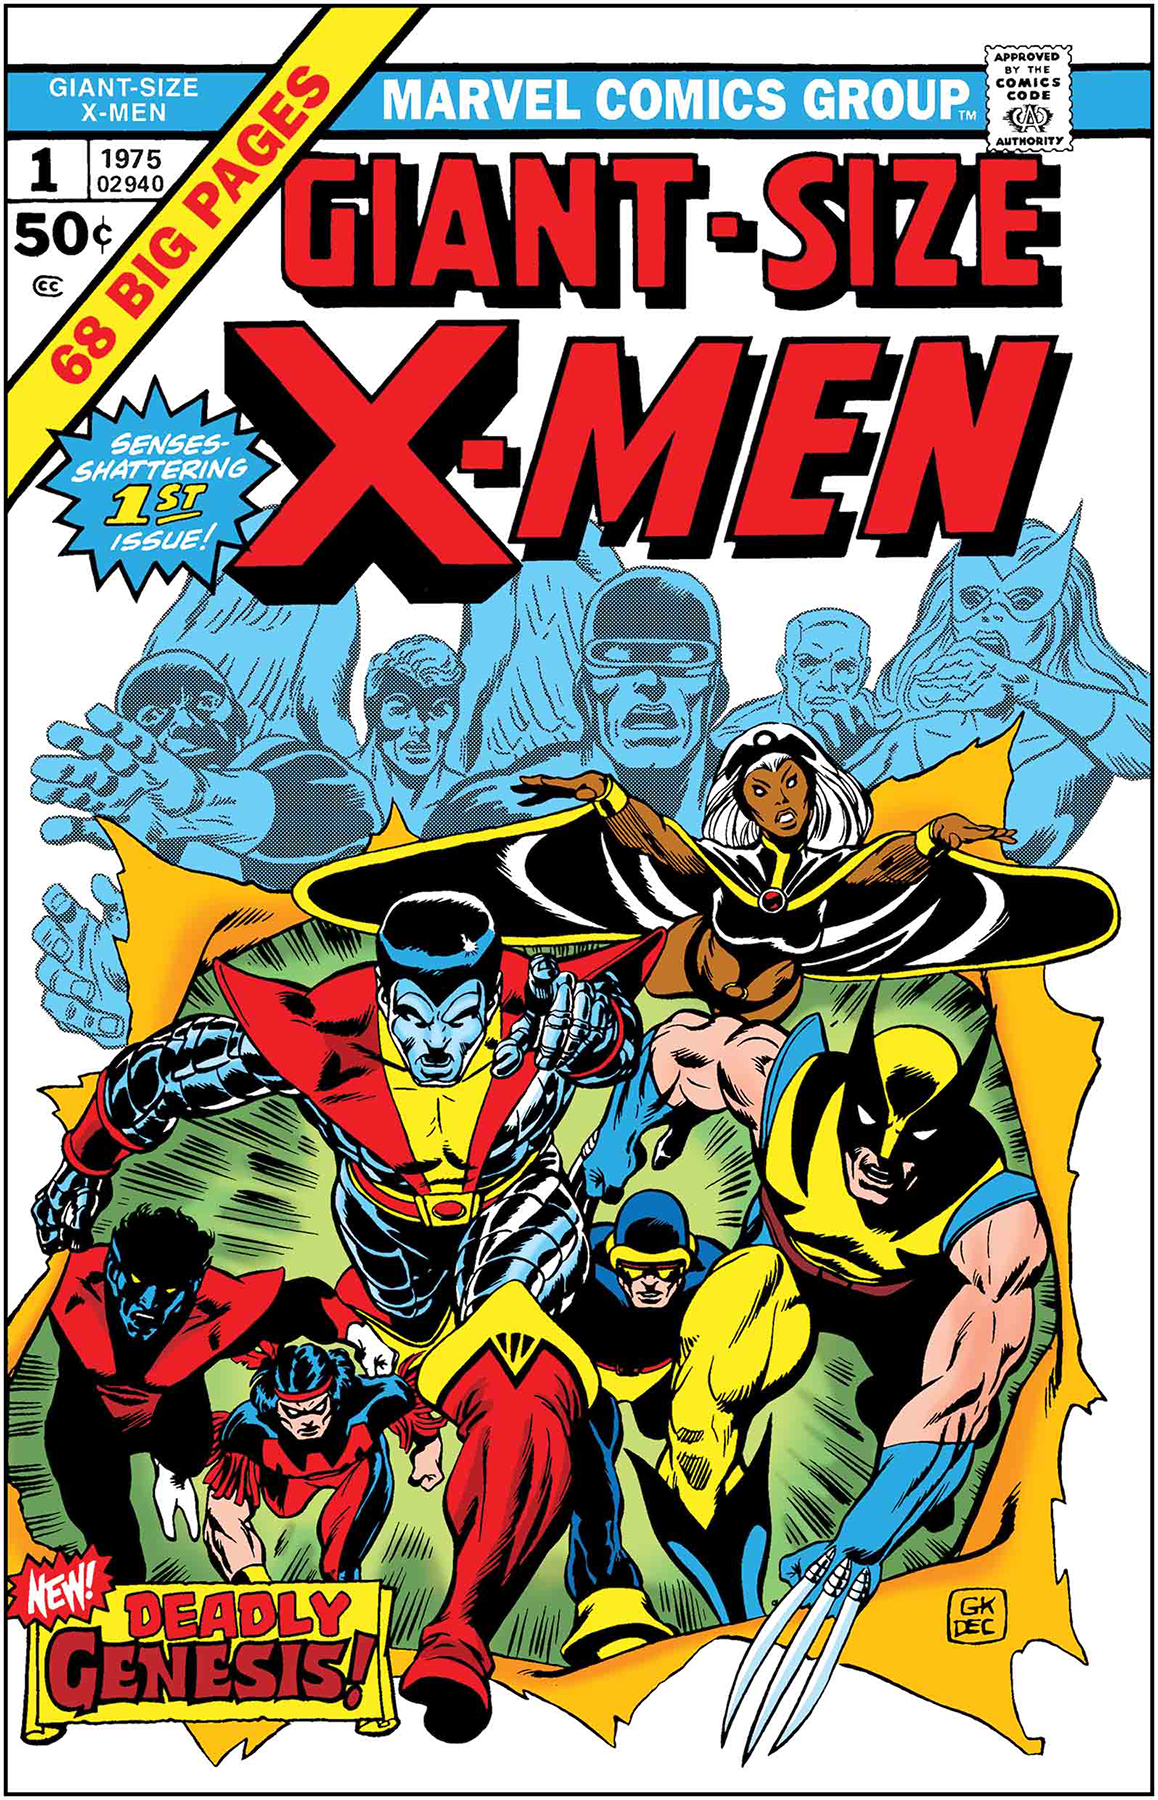 1980s 1990s THE UNCANNY XMEN key issues Marvel